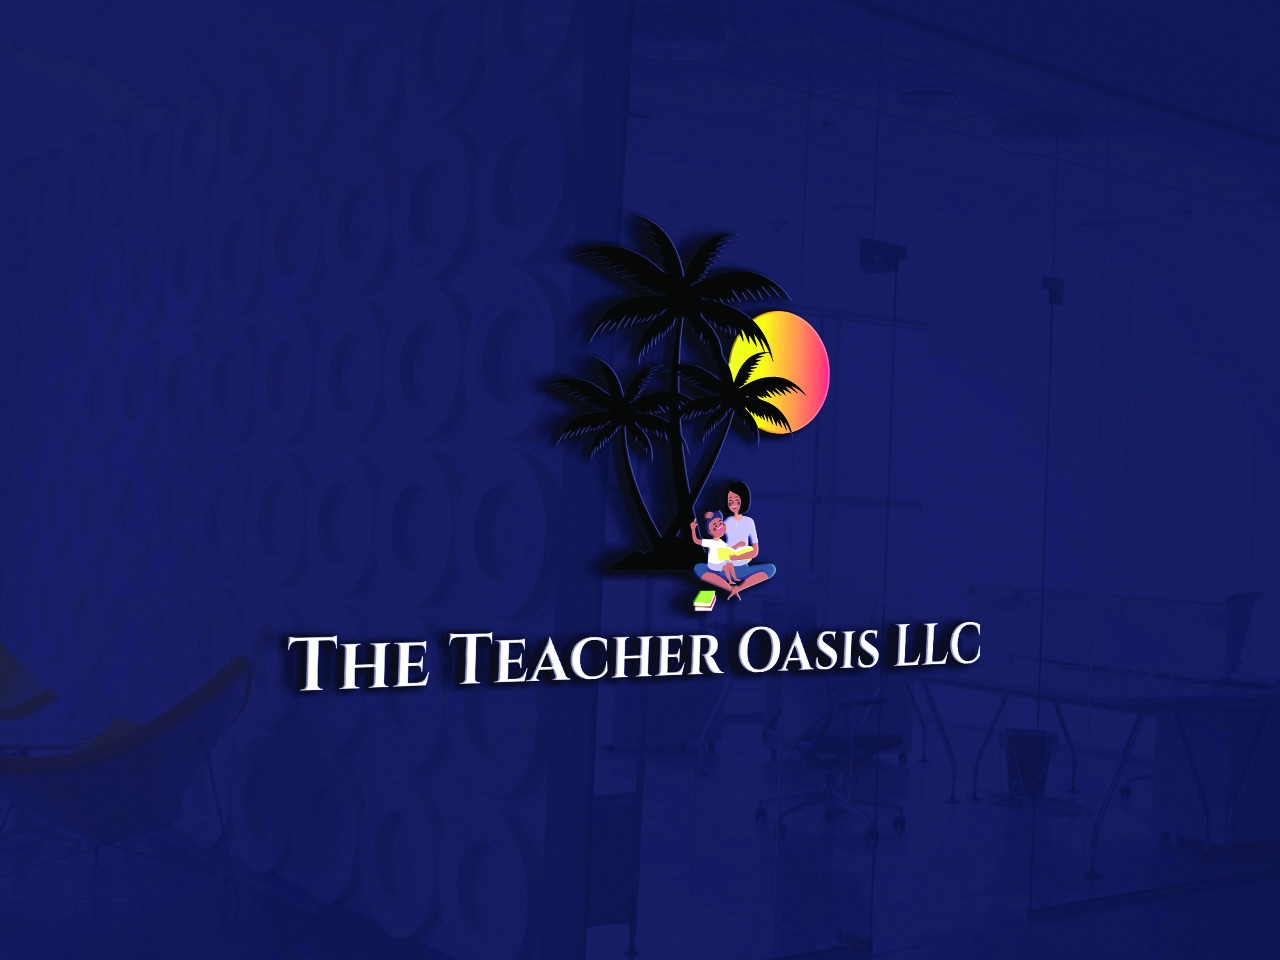 The Teacher Oasis LLC logo